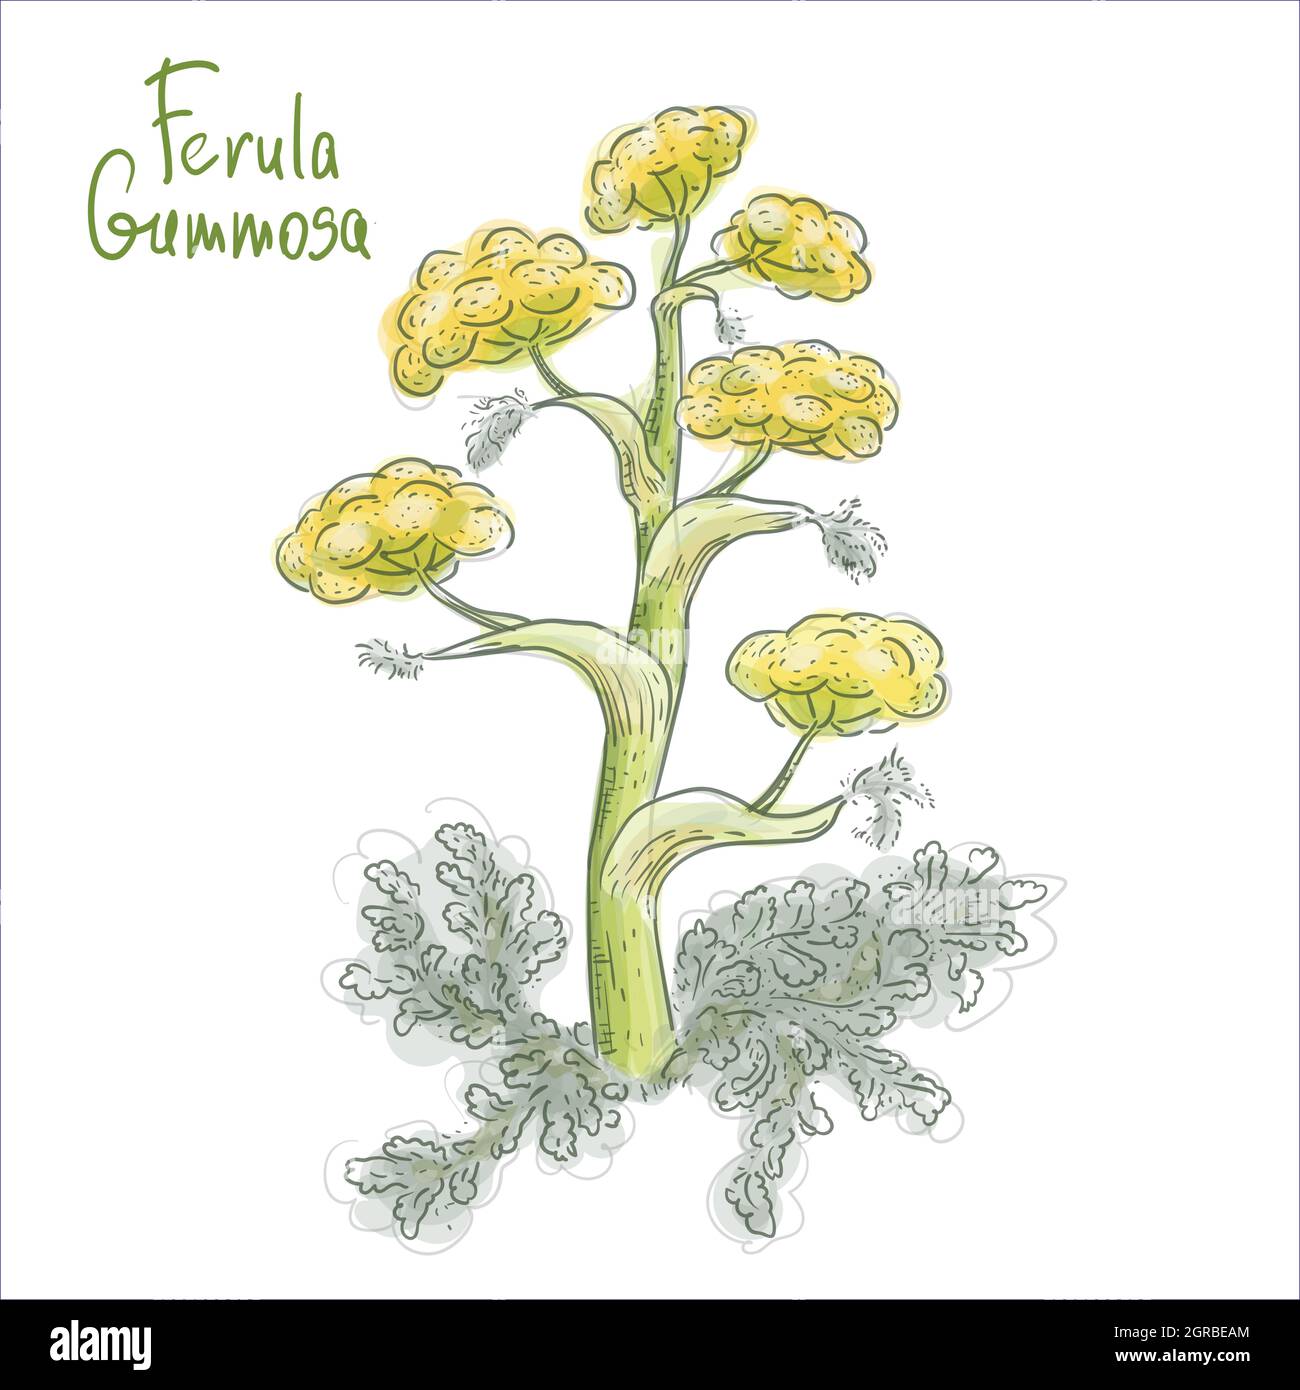 Ferula gummosa or ferula galbaniflua. Vector illustration Stock Vector